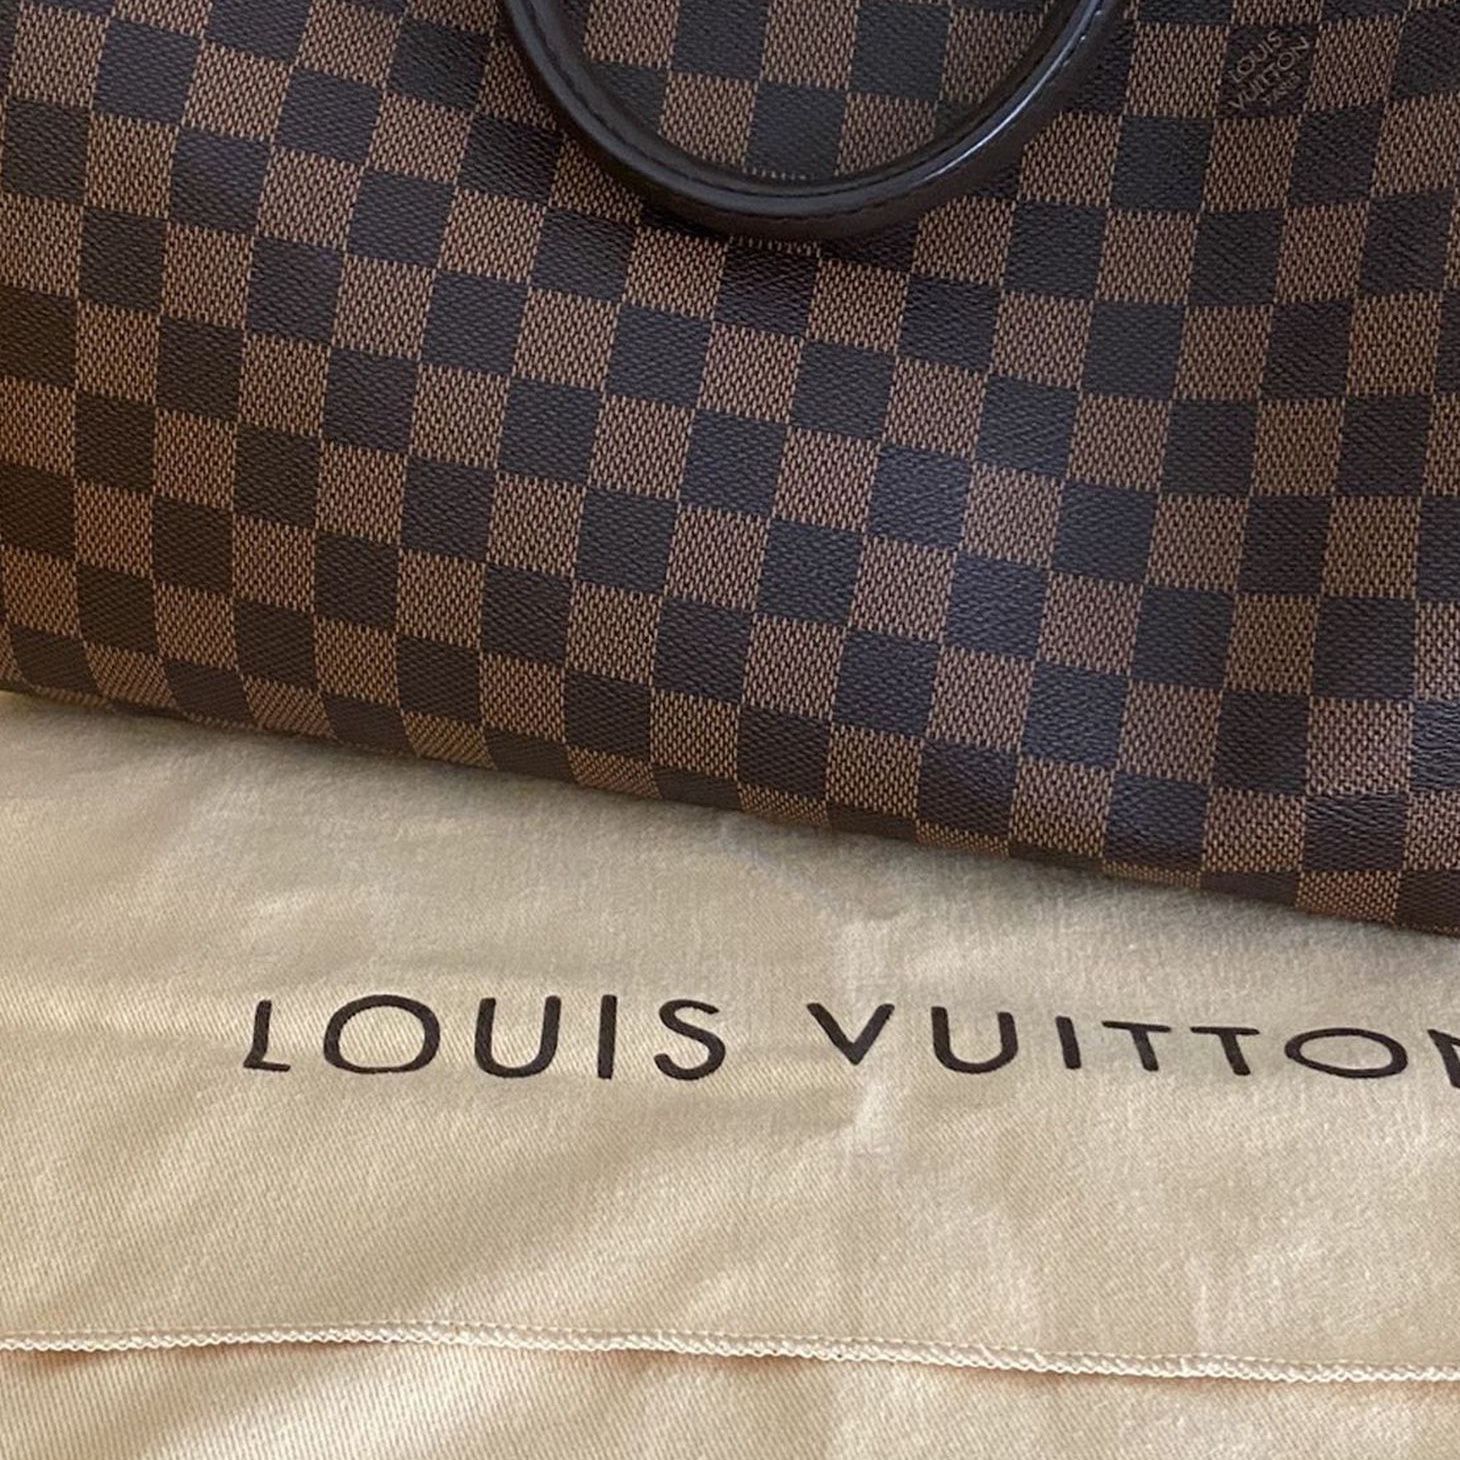 Louis Vuitton Speedy 30 Handbag - Brand New